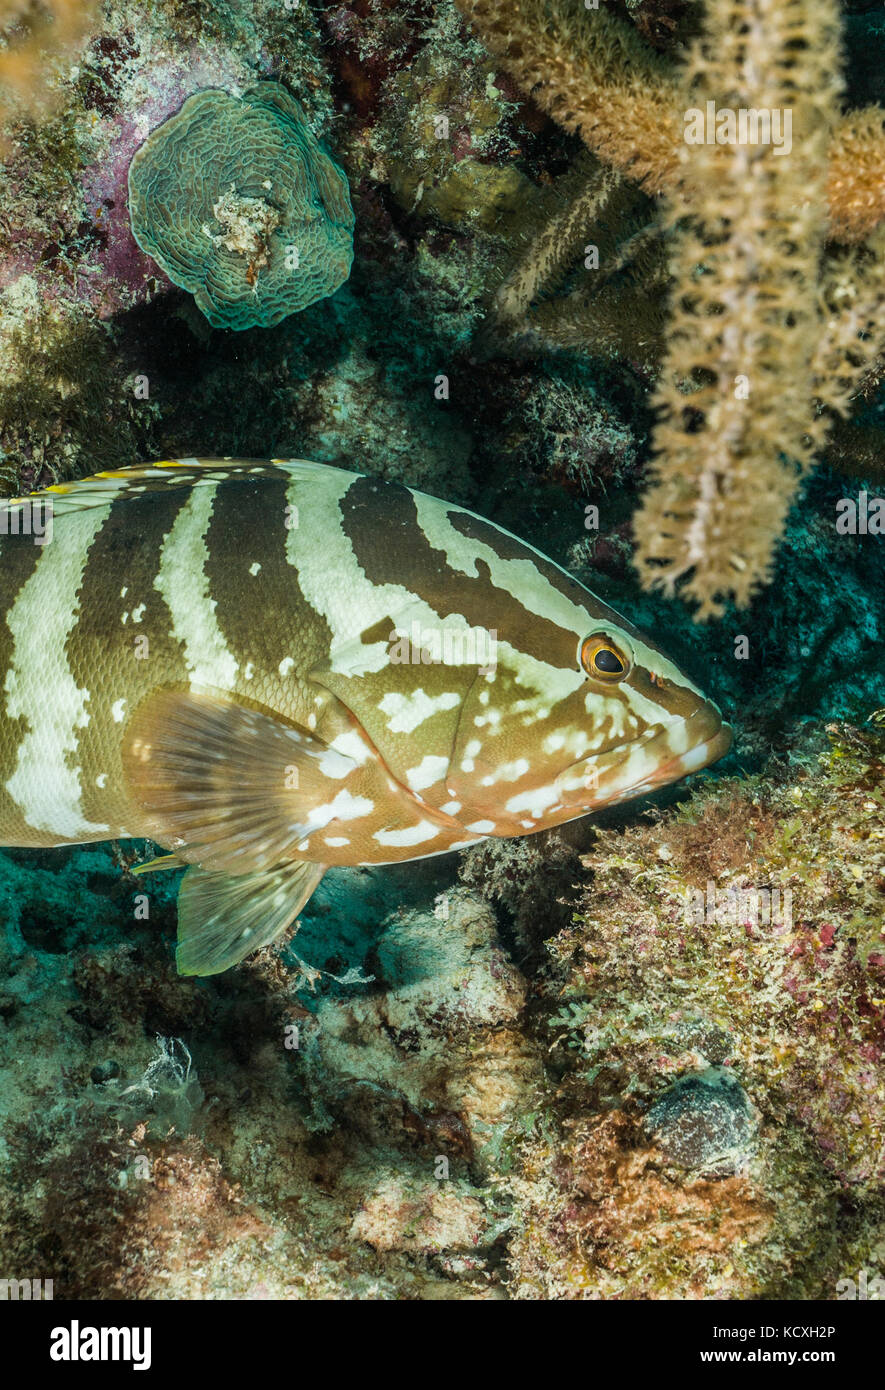 Nassau grouper (Epinephelus striatus). Foto de stock